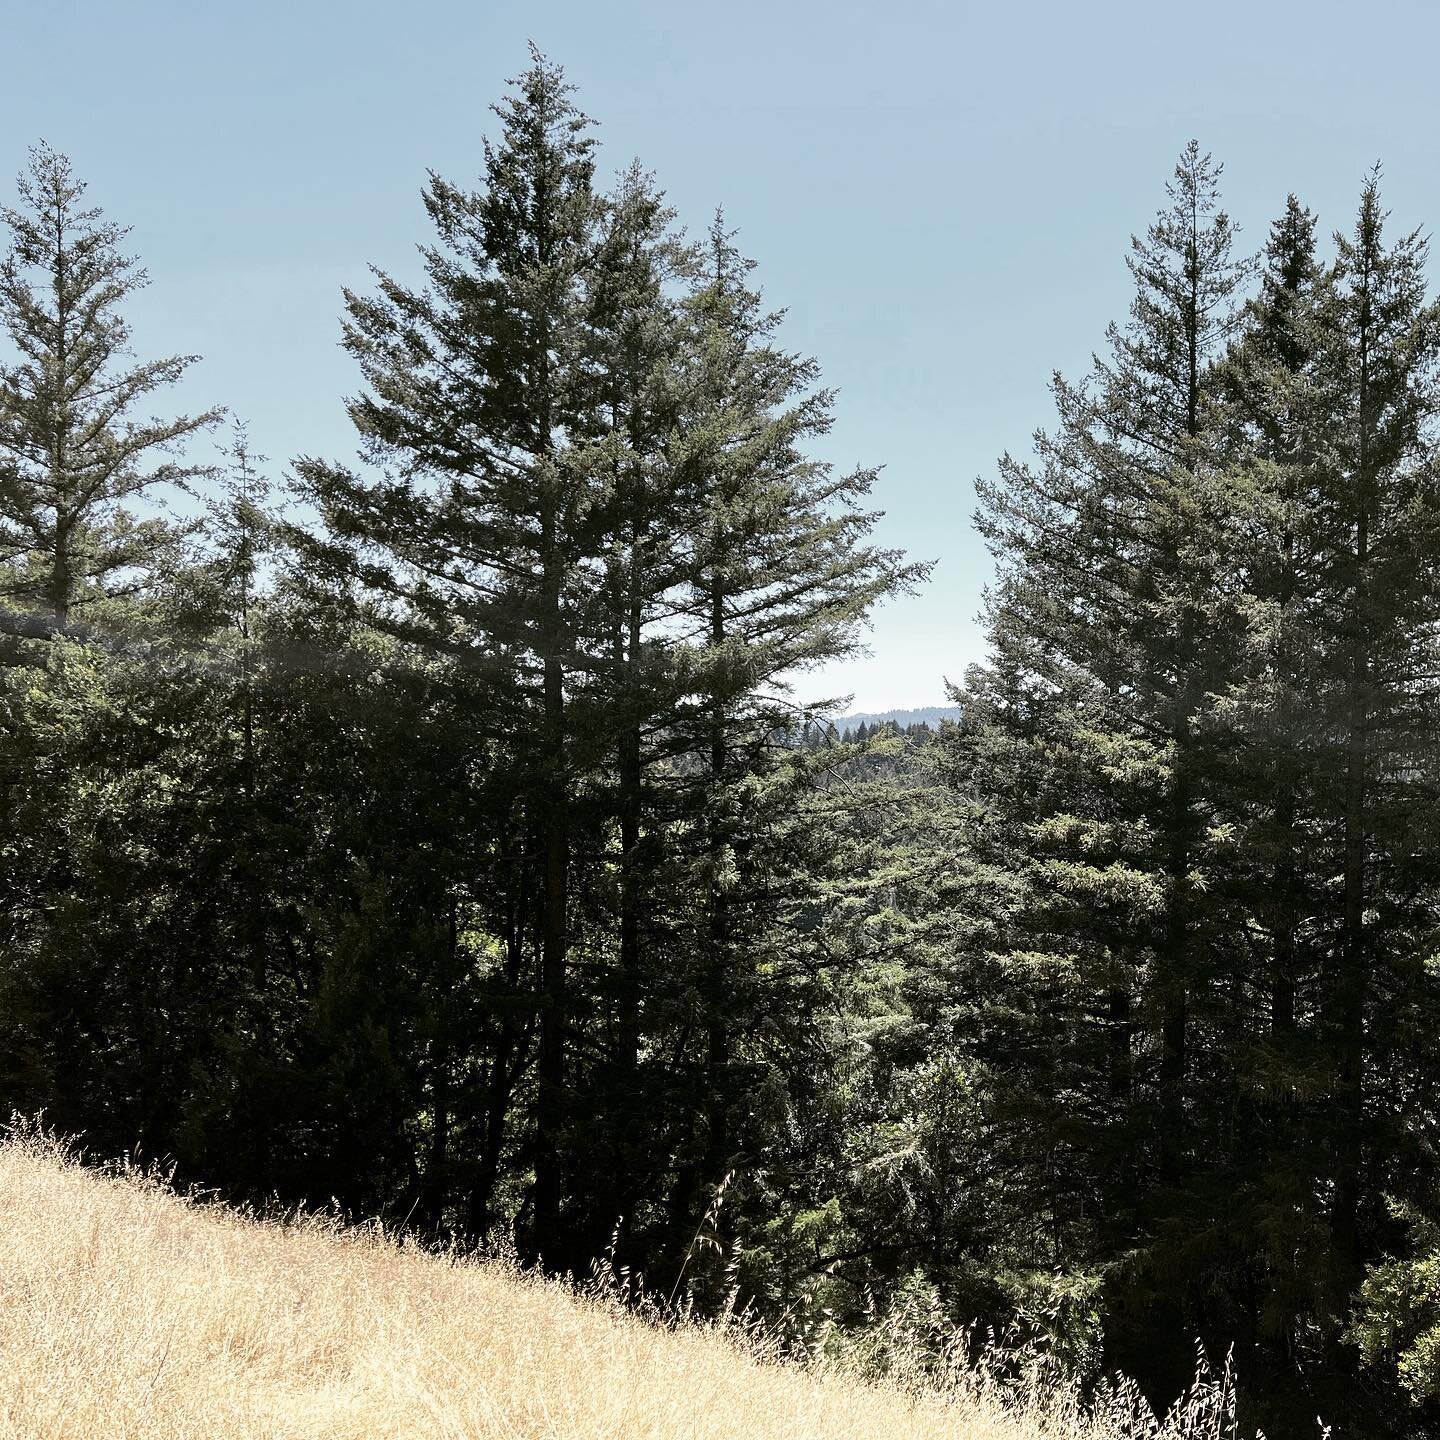 Happy Friday! Go hug a tree this weekend.

#treesofinstagram #hikecalifornia #hugatree #lanaturaleza